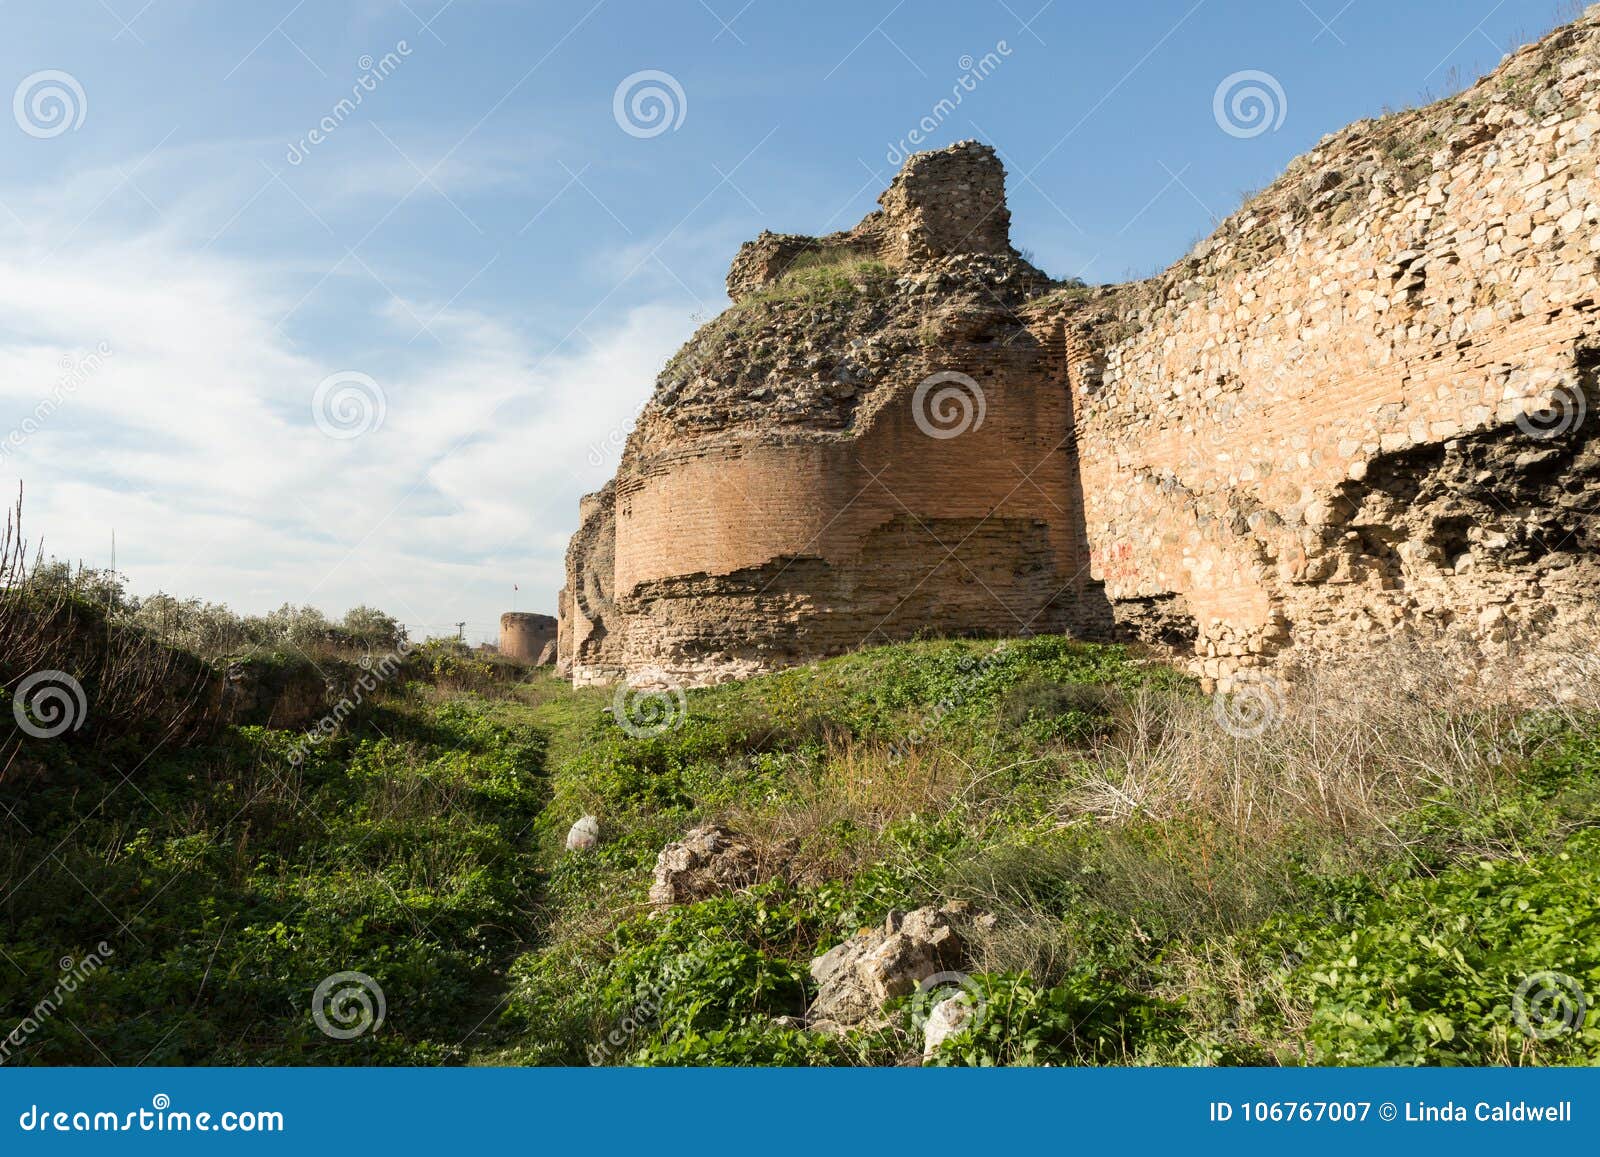 ancient roman walls surrounding iznik nicea